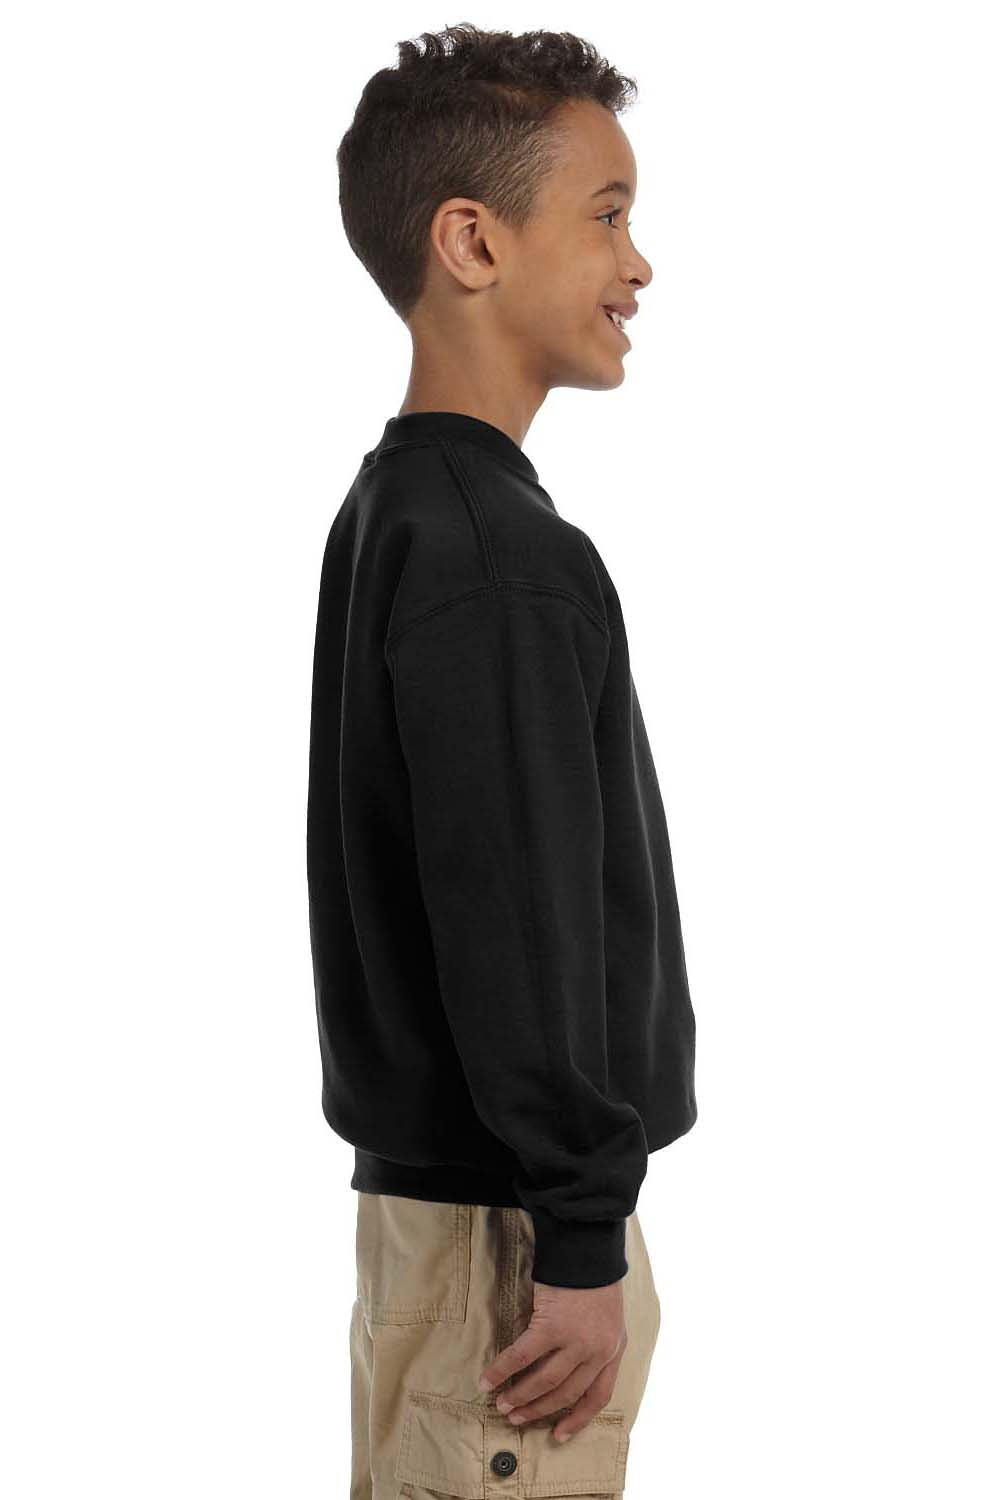 Gildan G180B Youth Fleece Crewneck Sweatshirt Black Side